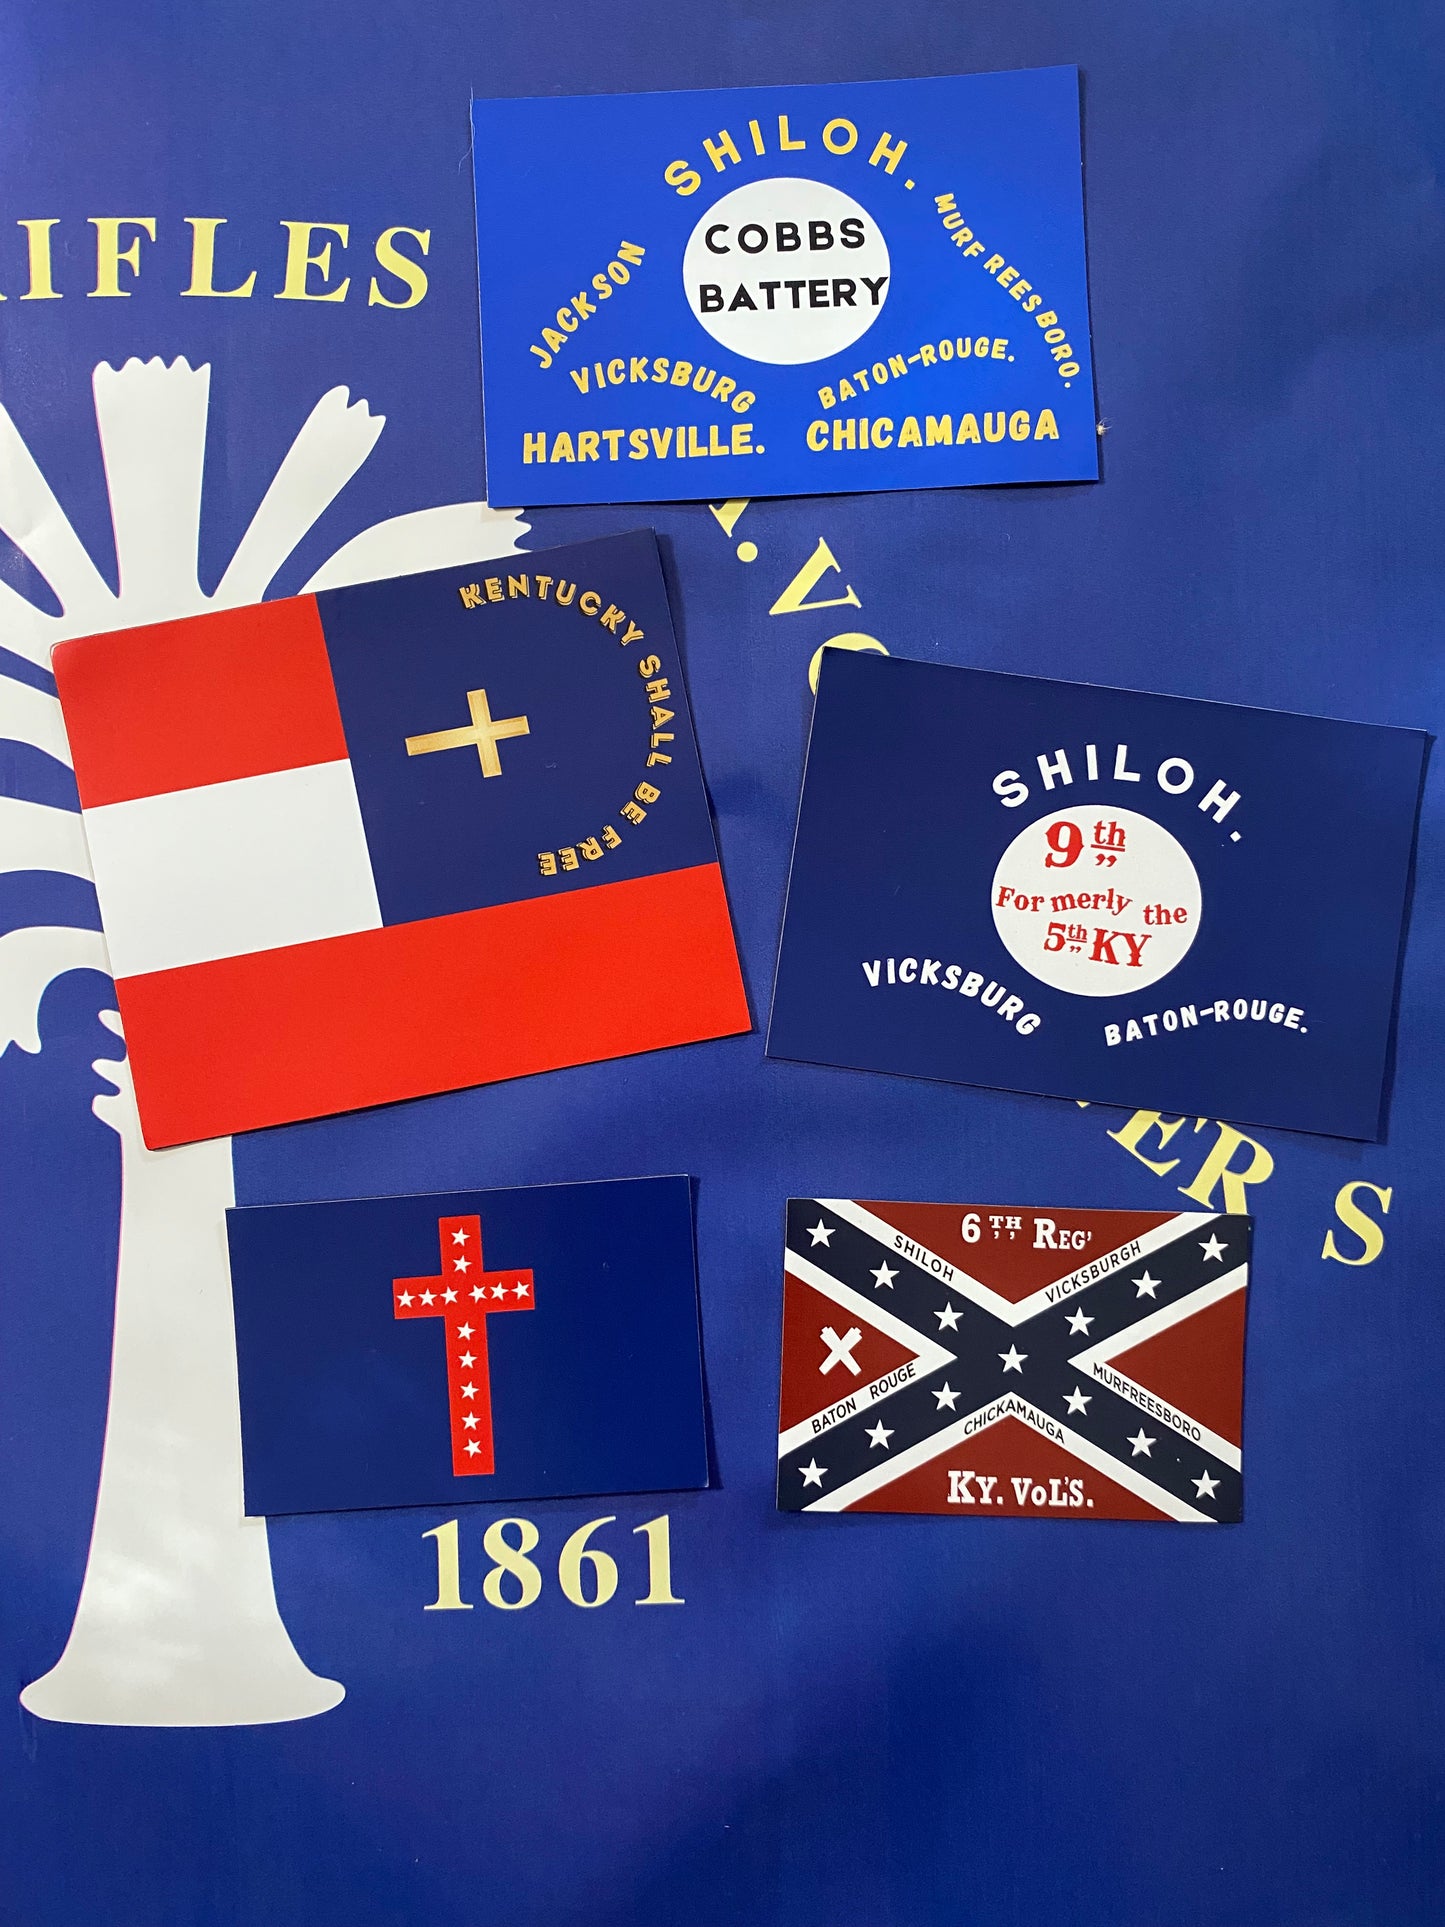 3rd Kentucky Flag - Orphan Brigade Stickers/Magnet